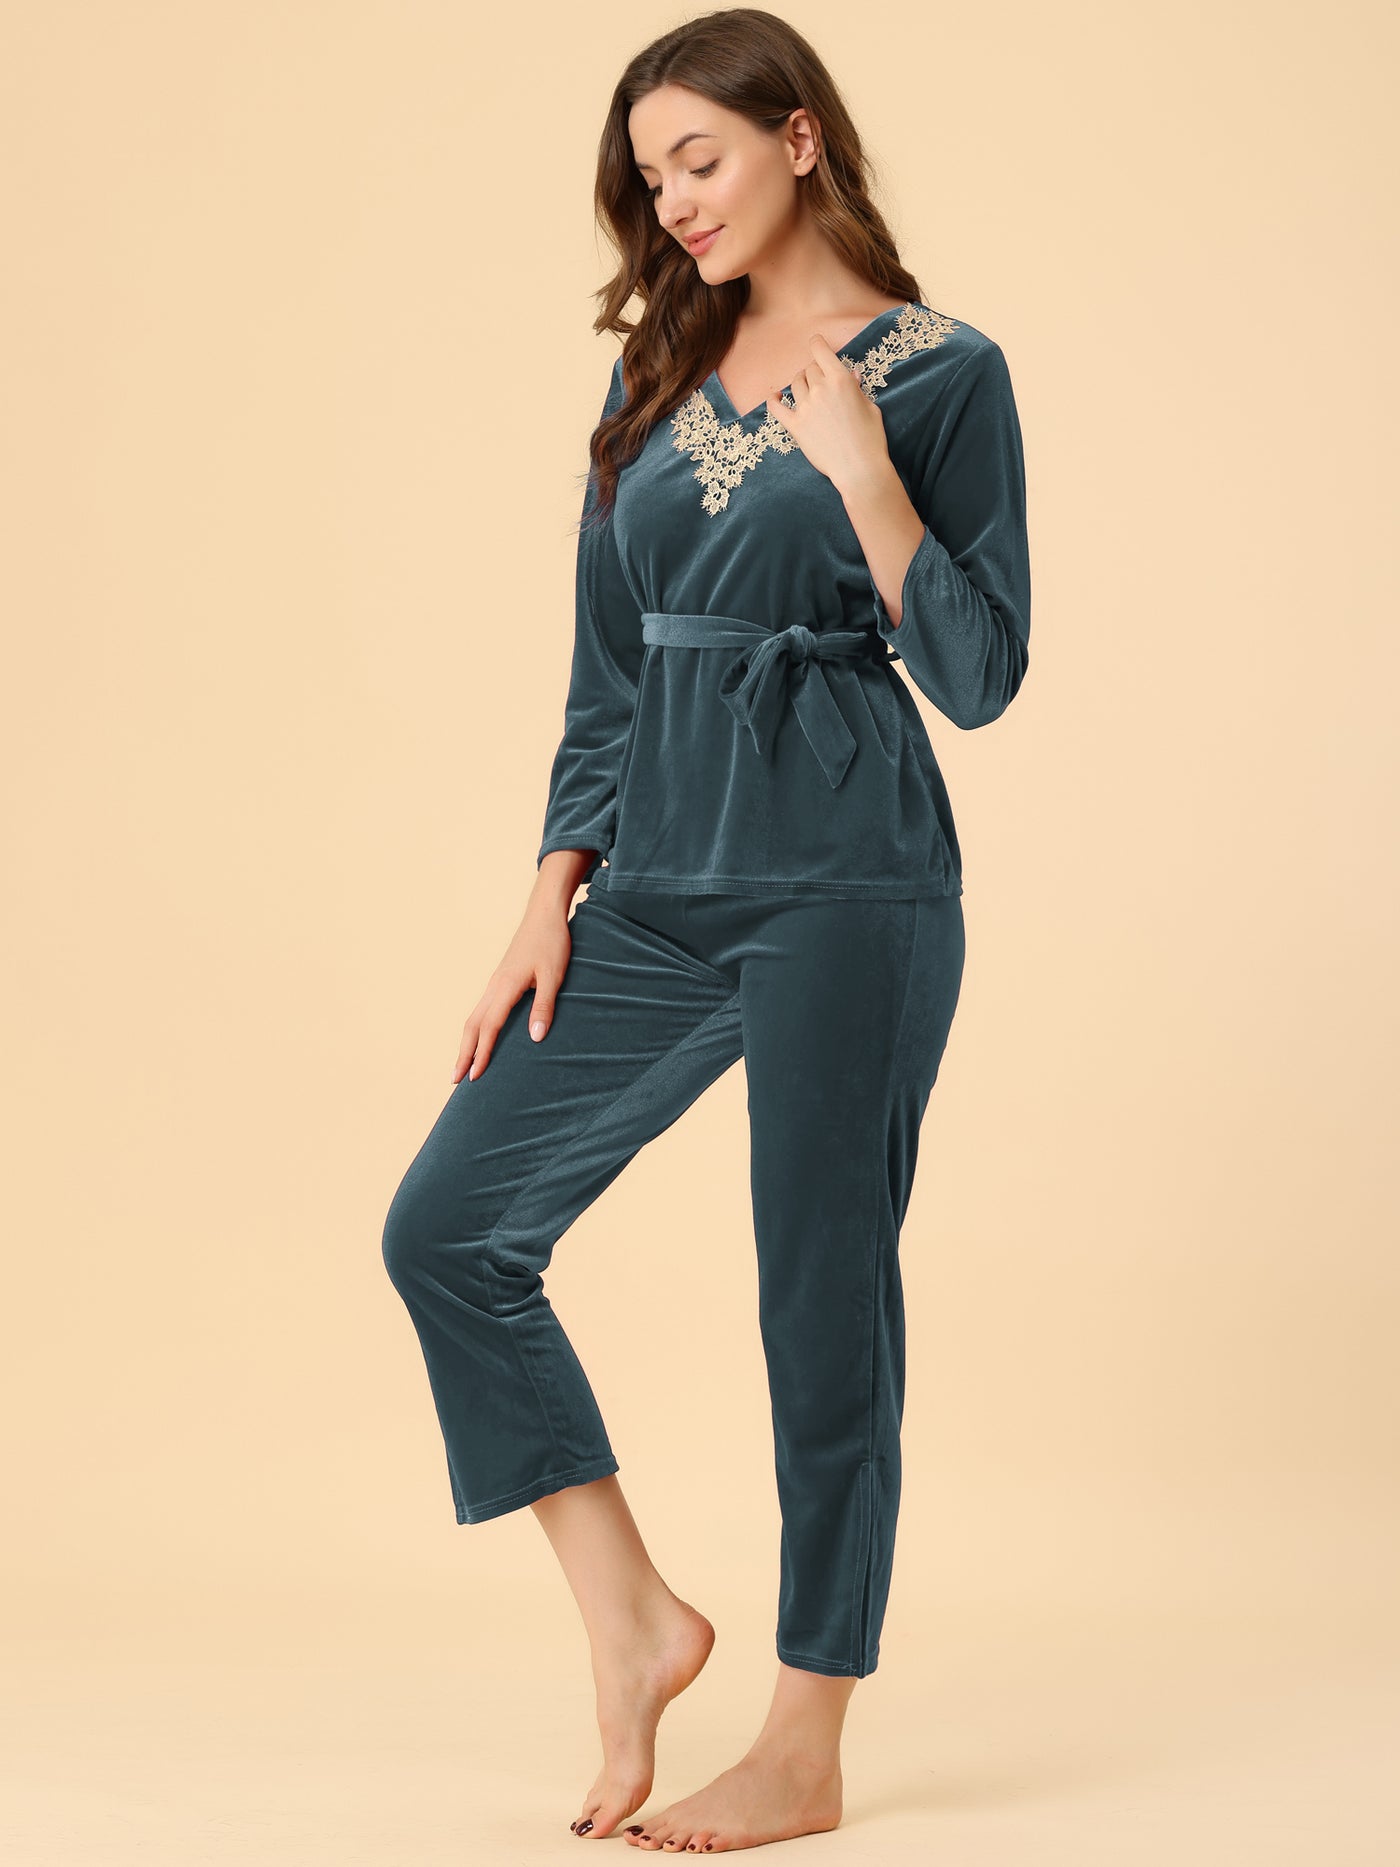 Allegra K Velvet Sleepwear Pajama V-Neck Lace Night Suit with Belted Lounge Set